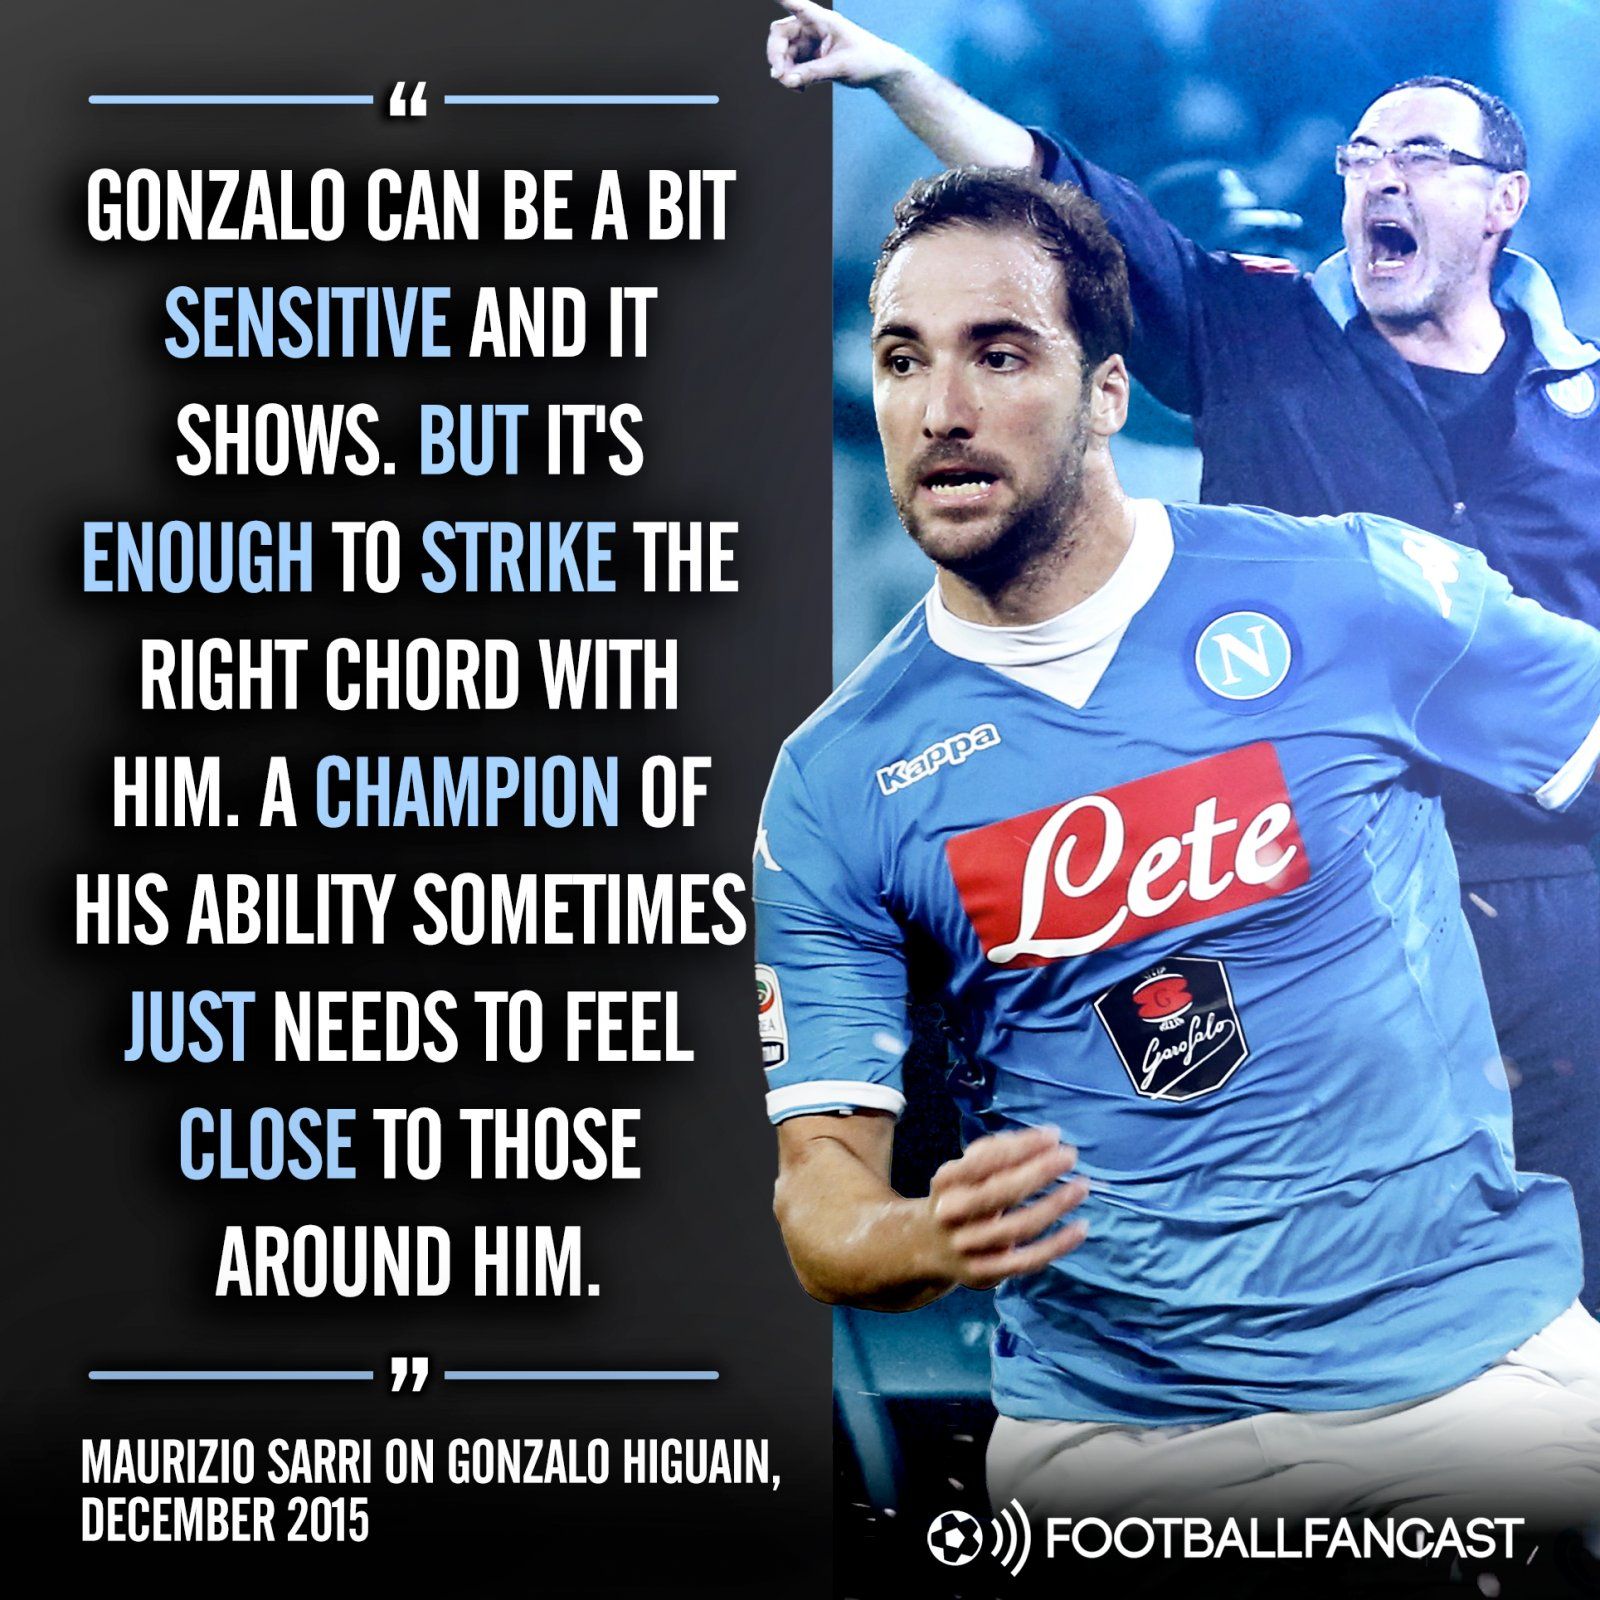 Maurizio Sarri's quote on sensitive Gonzalo Higuain